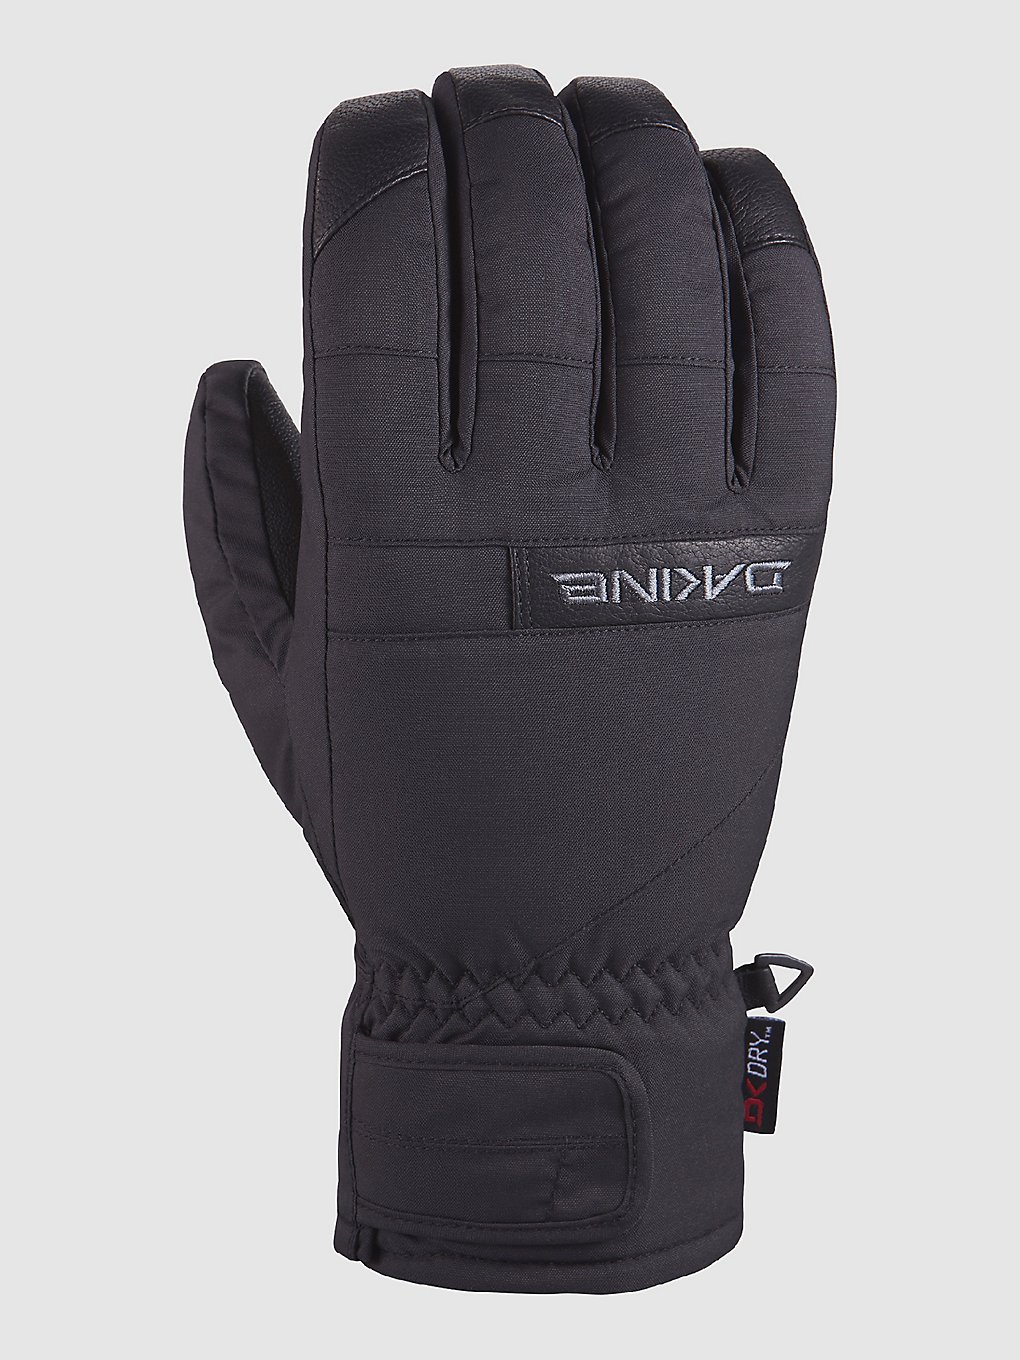 Dakine Nova Short Handschuhe black kaufen